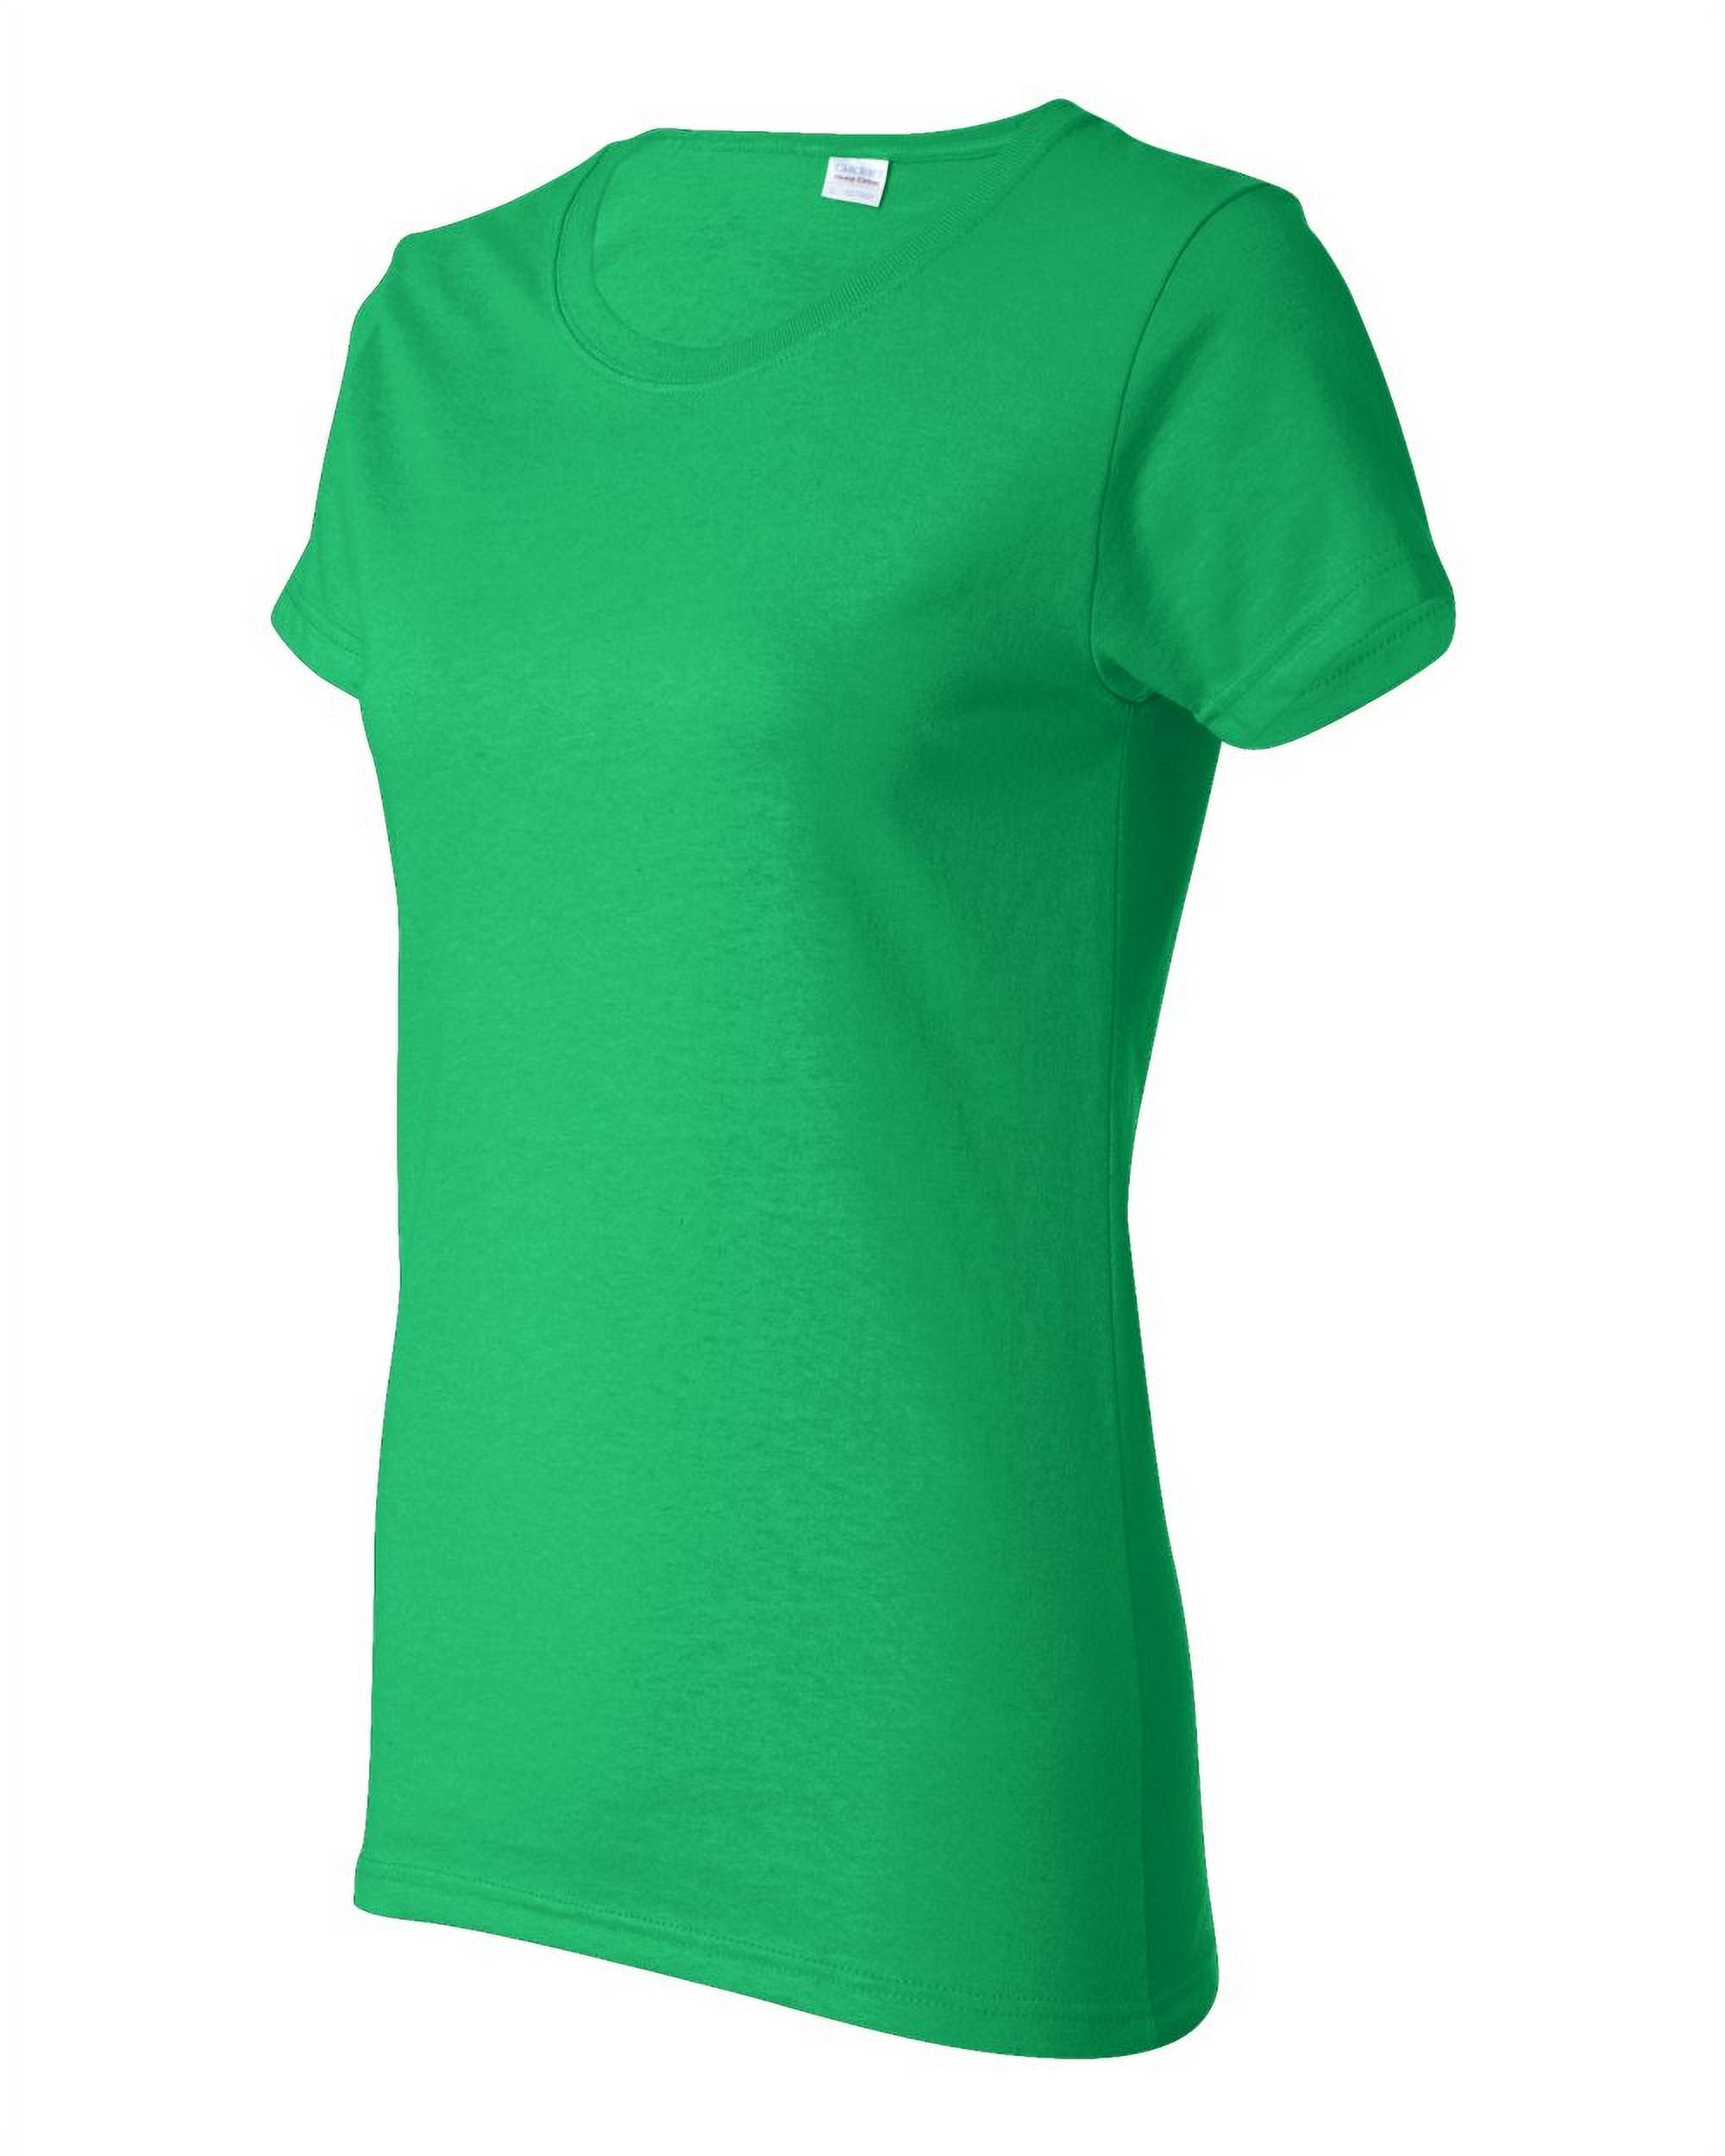 IWPF - Women's T-Shirt Short Sleeve - Welcome to Las Vegas Nevada - image 3 of 5